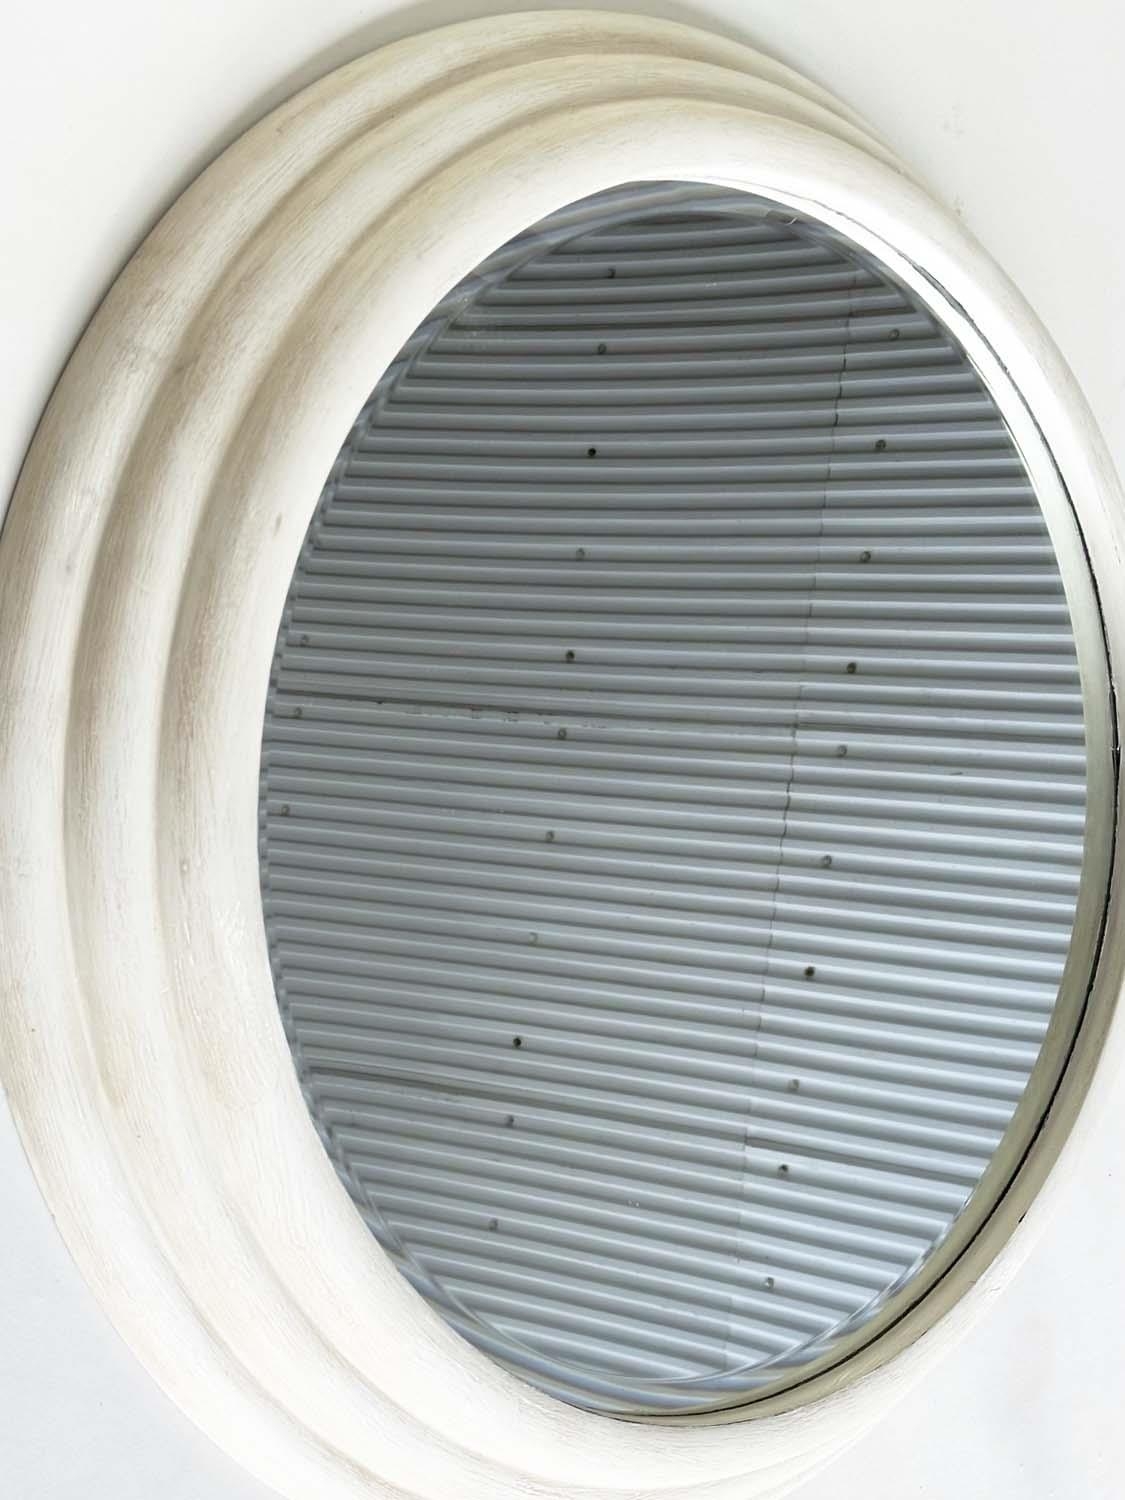 CIRCULAR WALL MIRROR, grey Bibendum style with bevelled glass, 110cm W. - Image 3 of 10